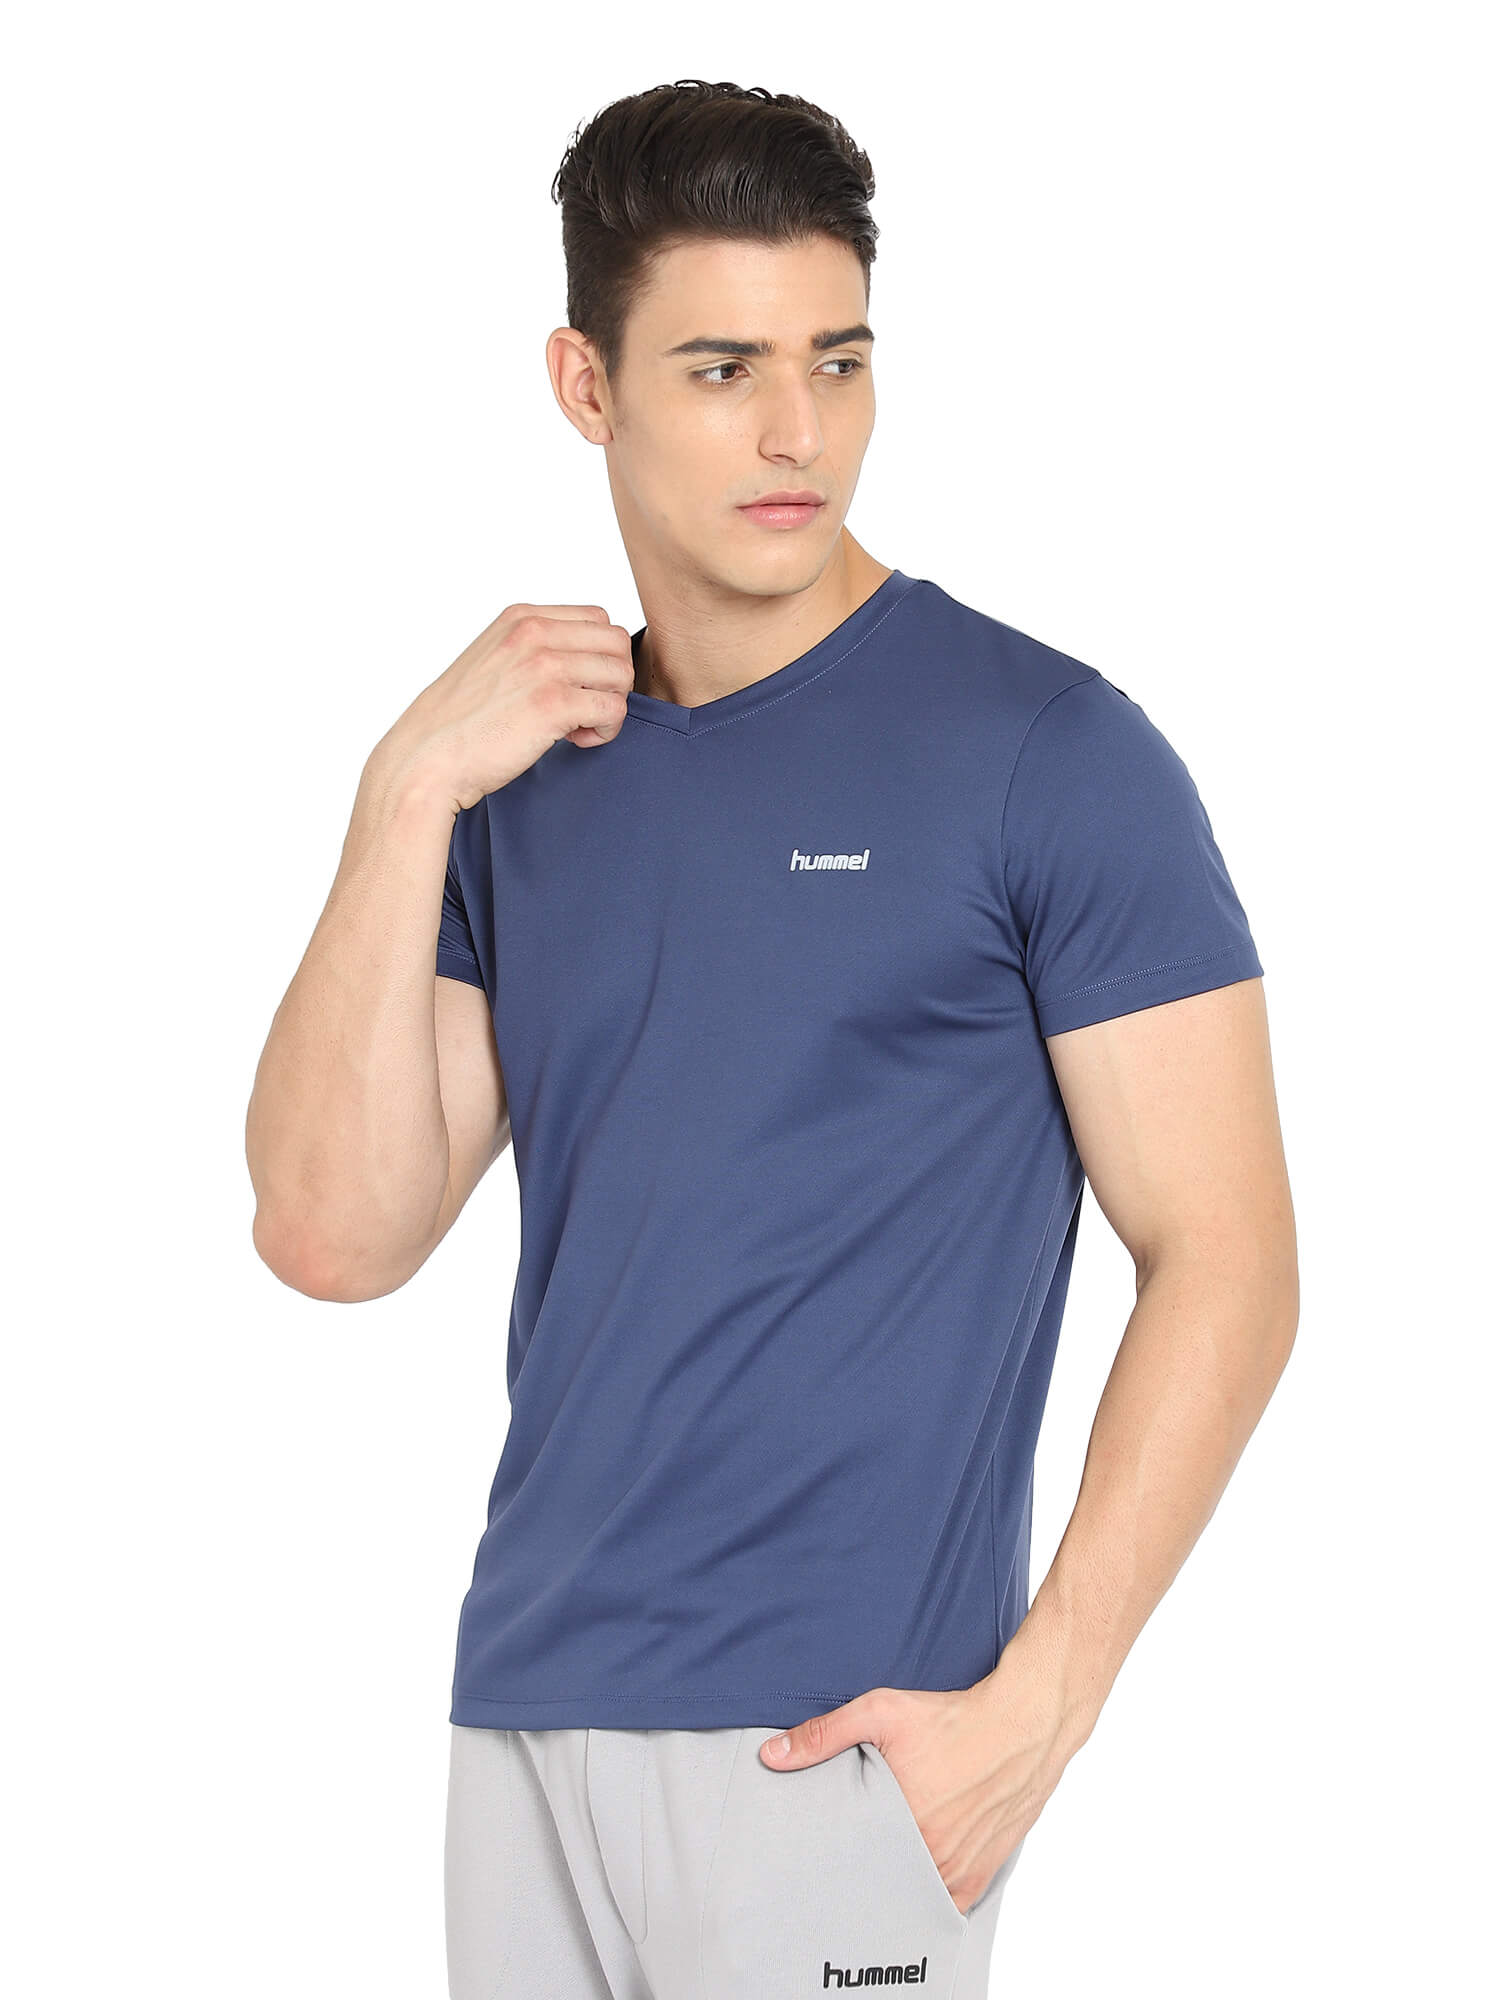 Amero Blue T-Shirts for Men